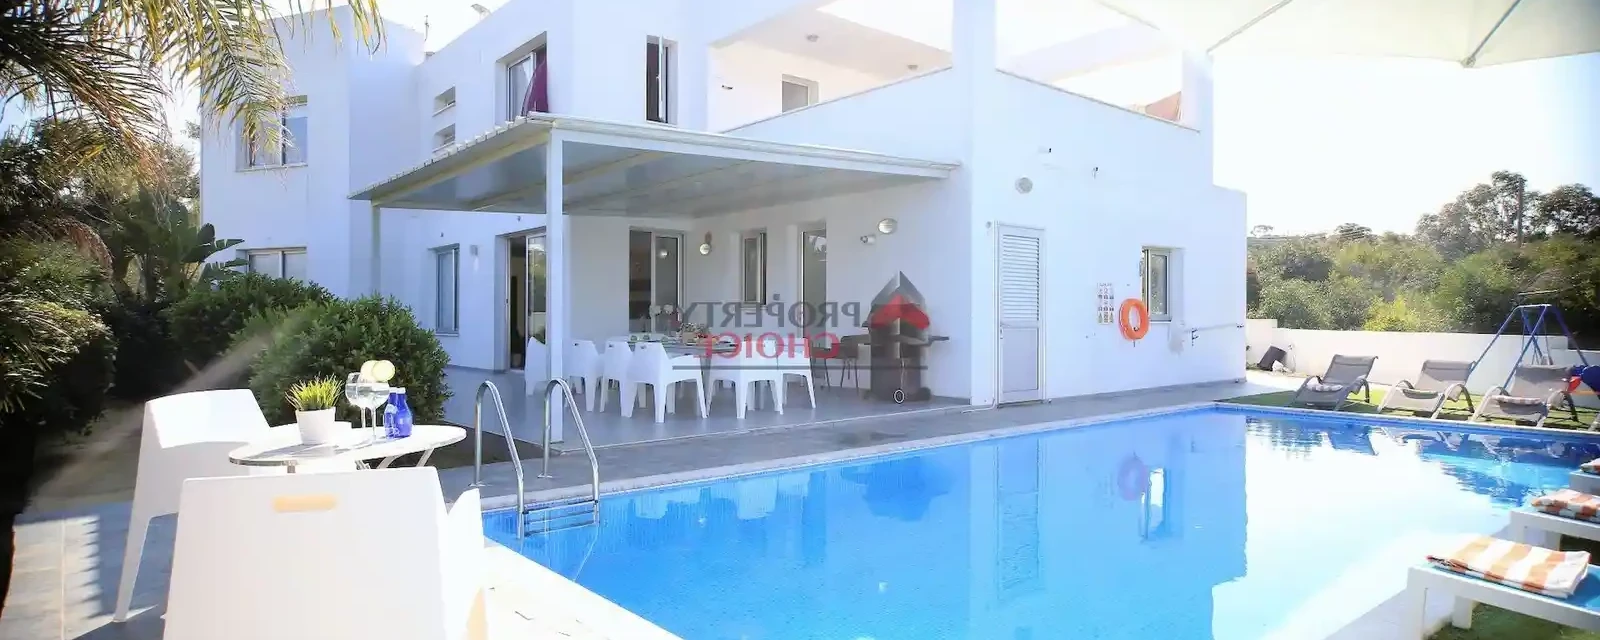 5-bedroom villa fоr sаle €1.100.000, image 1